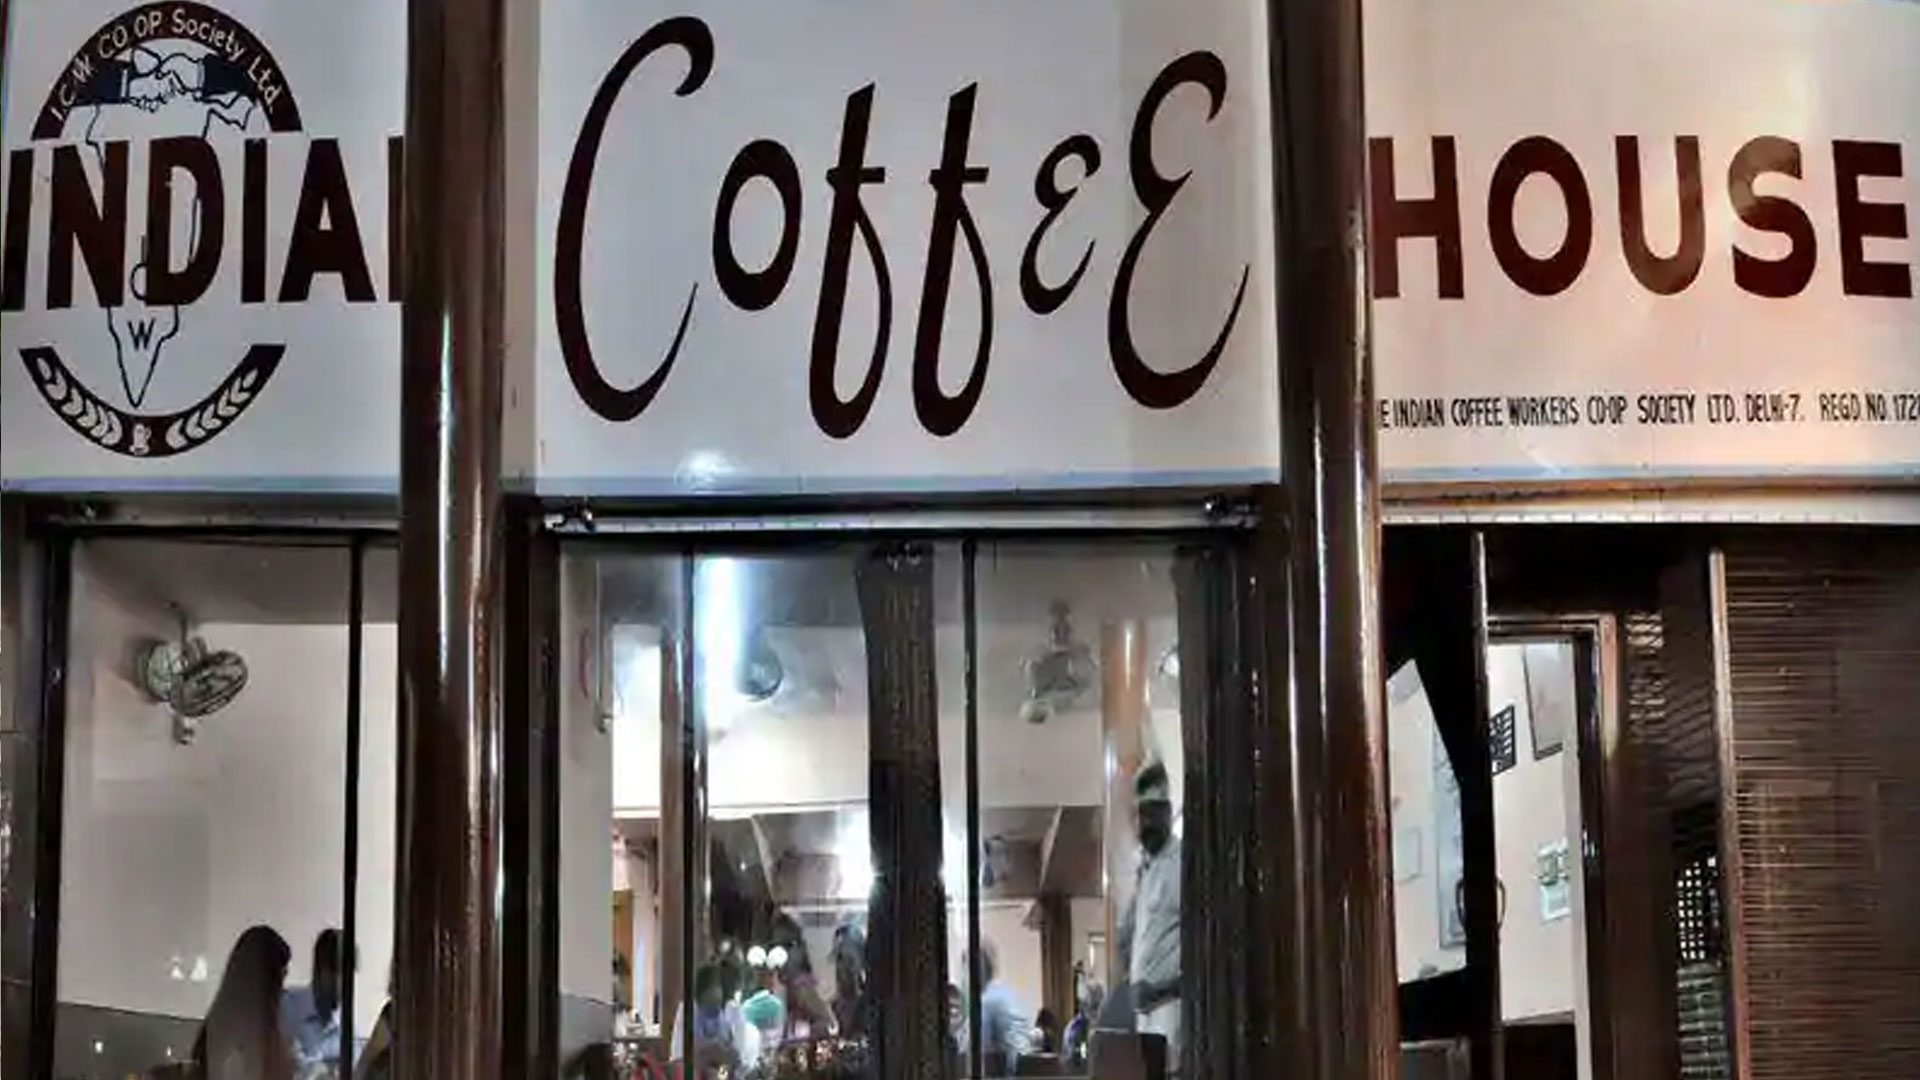 Indian coffee house